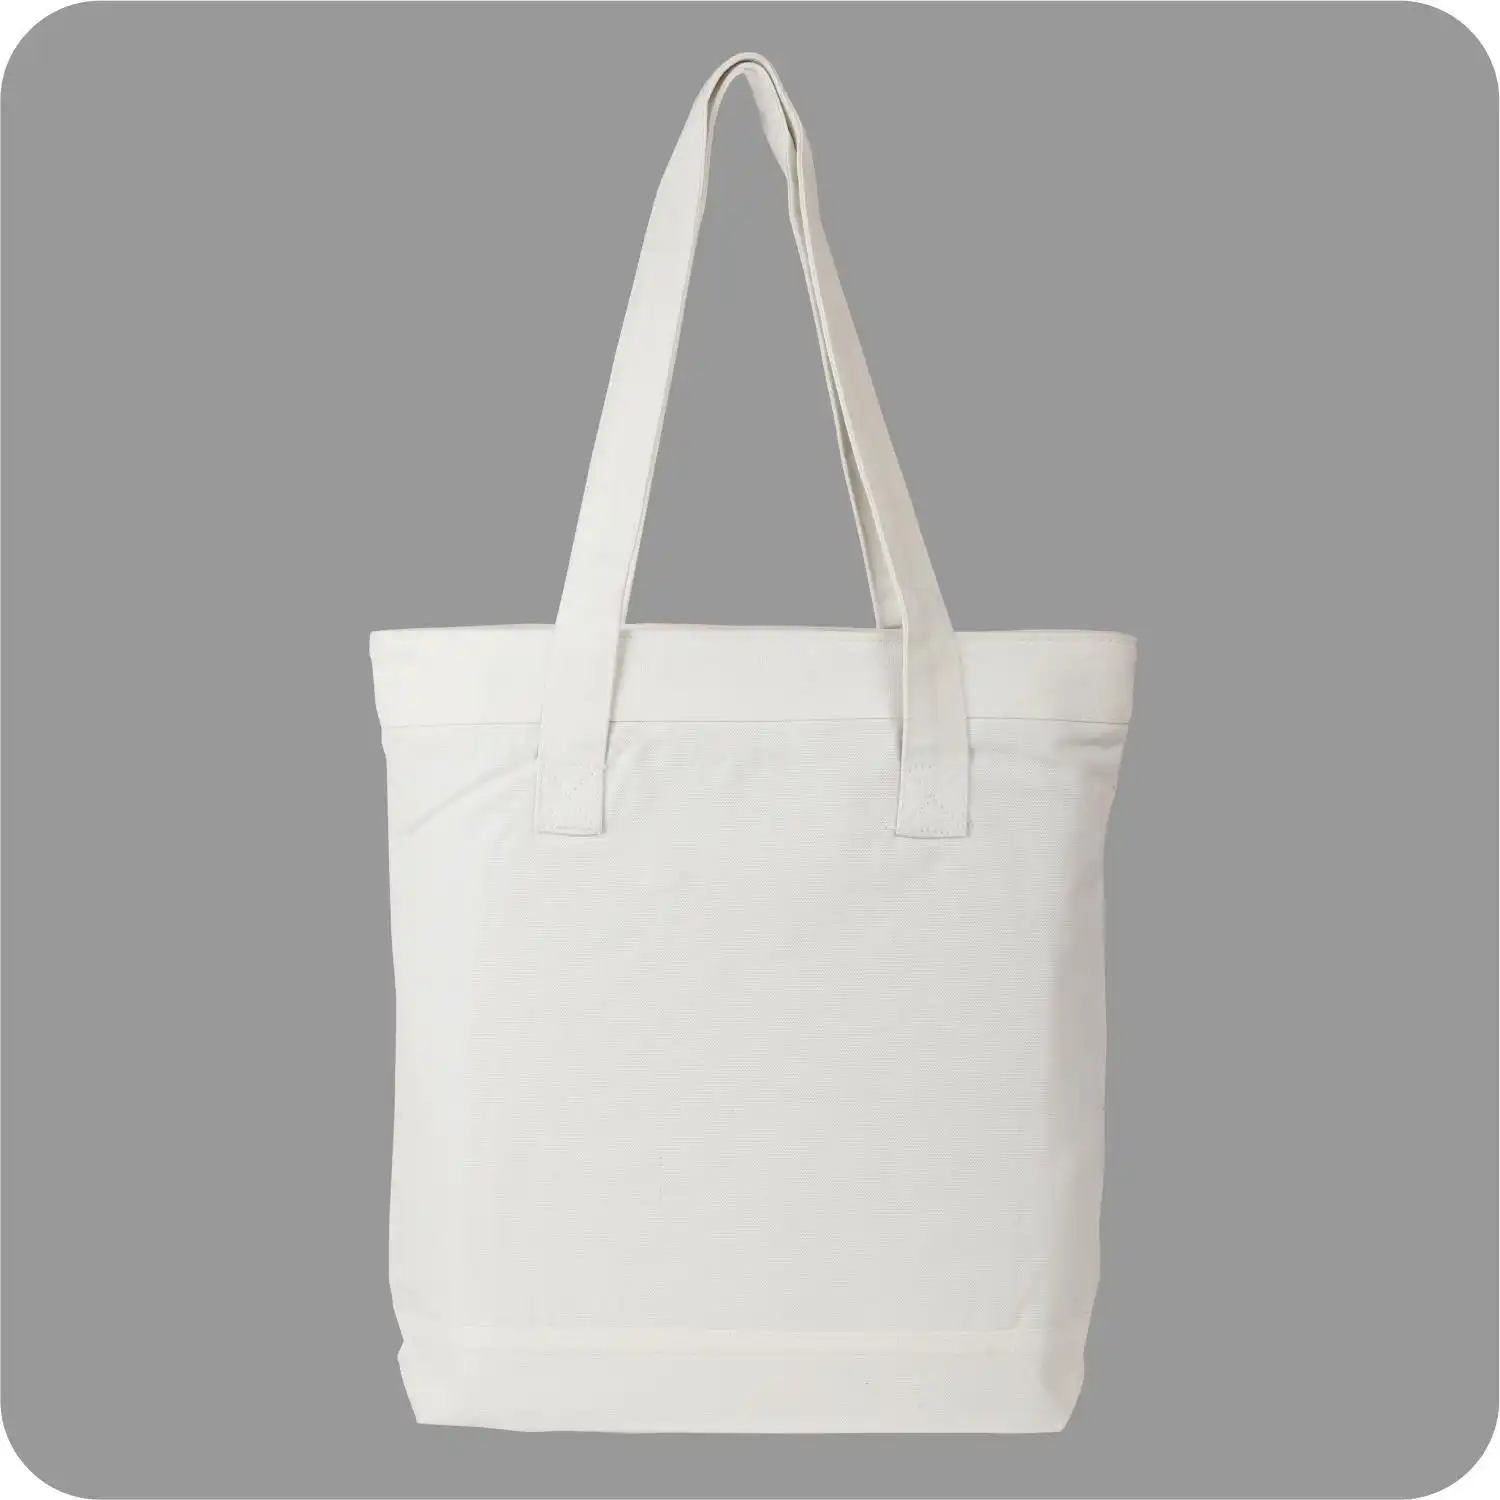 Vertically Shaped Maneuver Eco friendly Canvas Bags